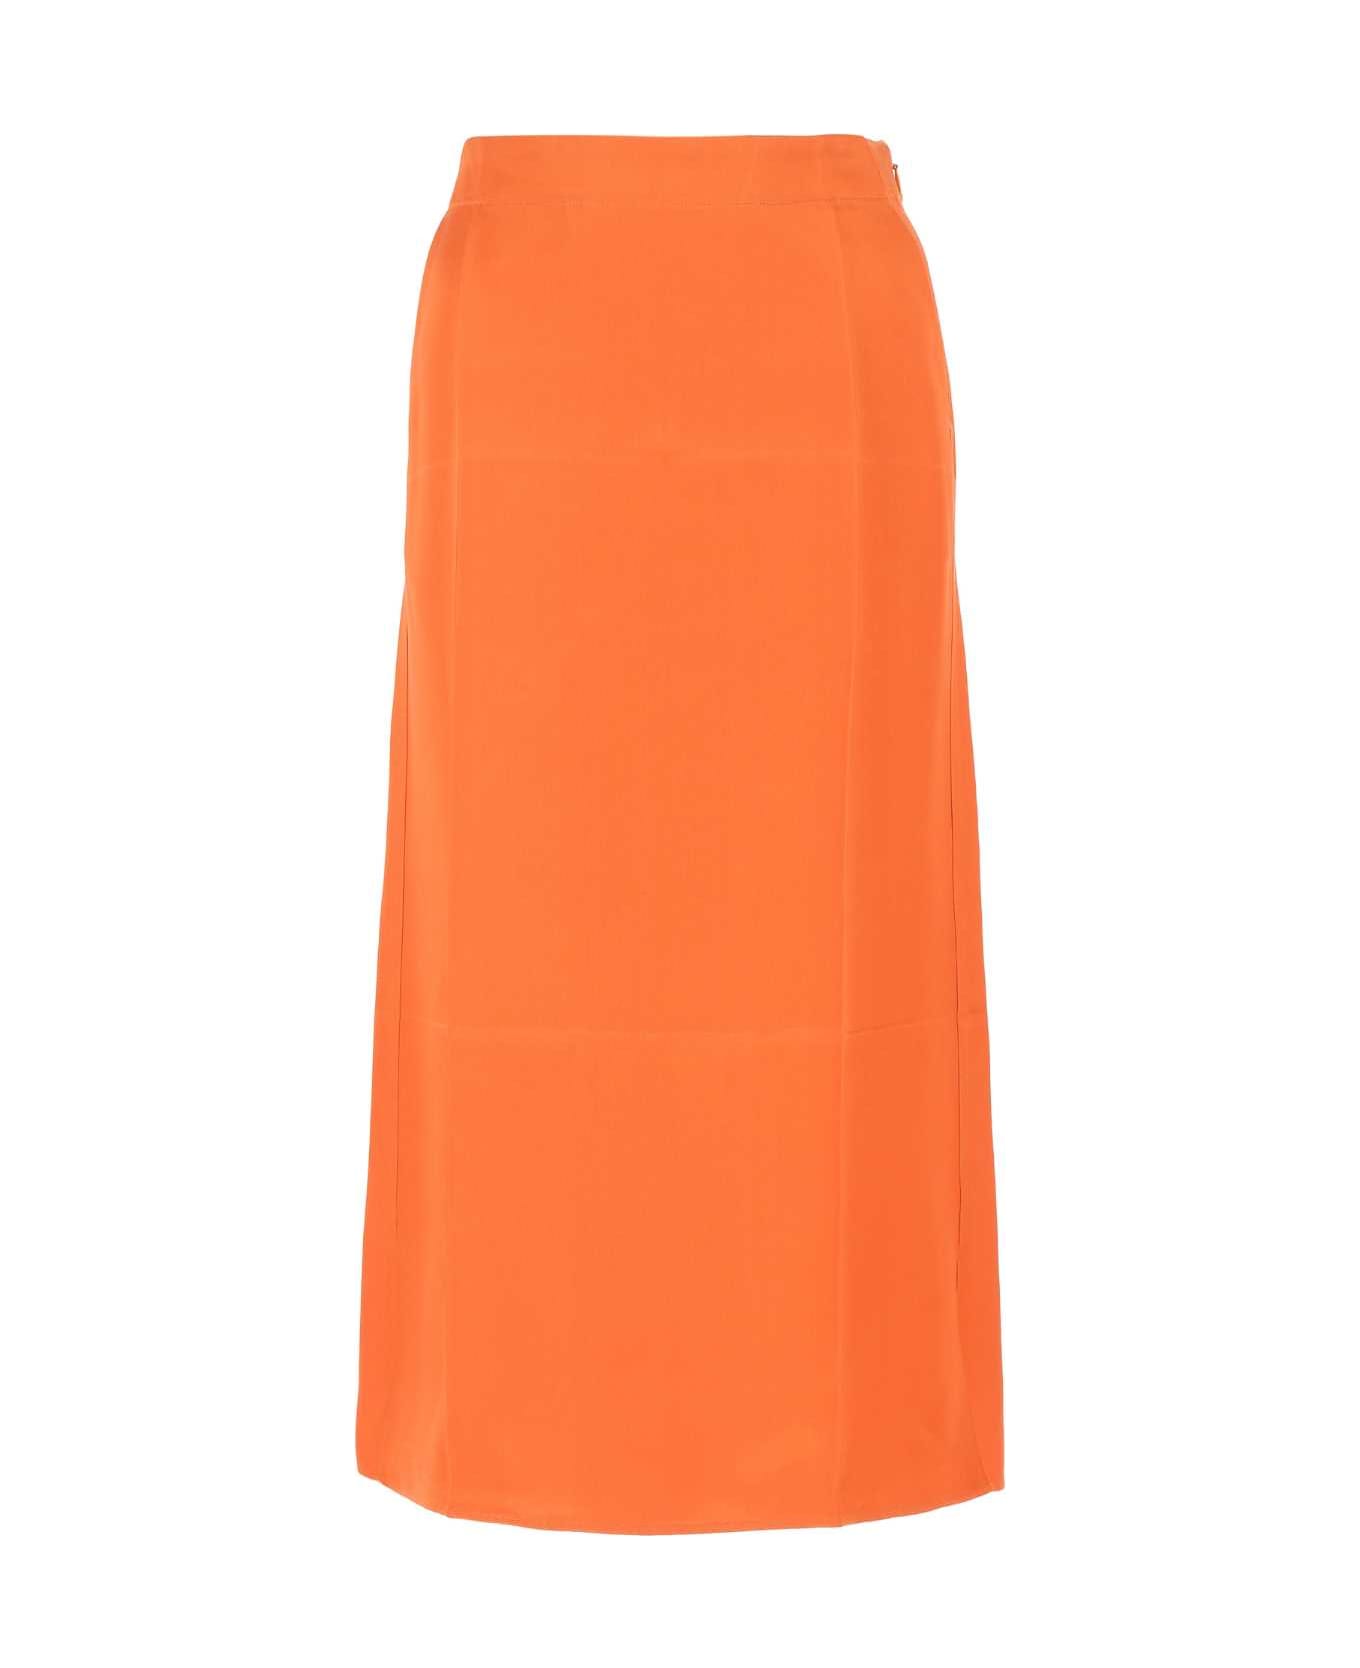 Loewe Orange Satin Skirt - BRIGHTORANGE